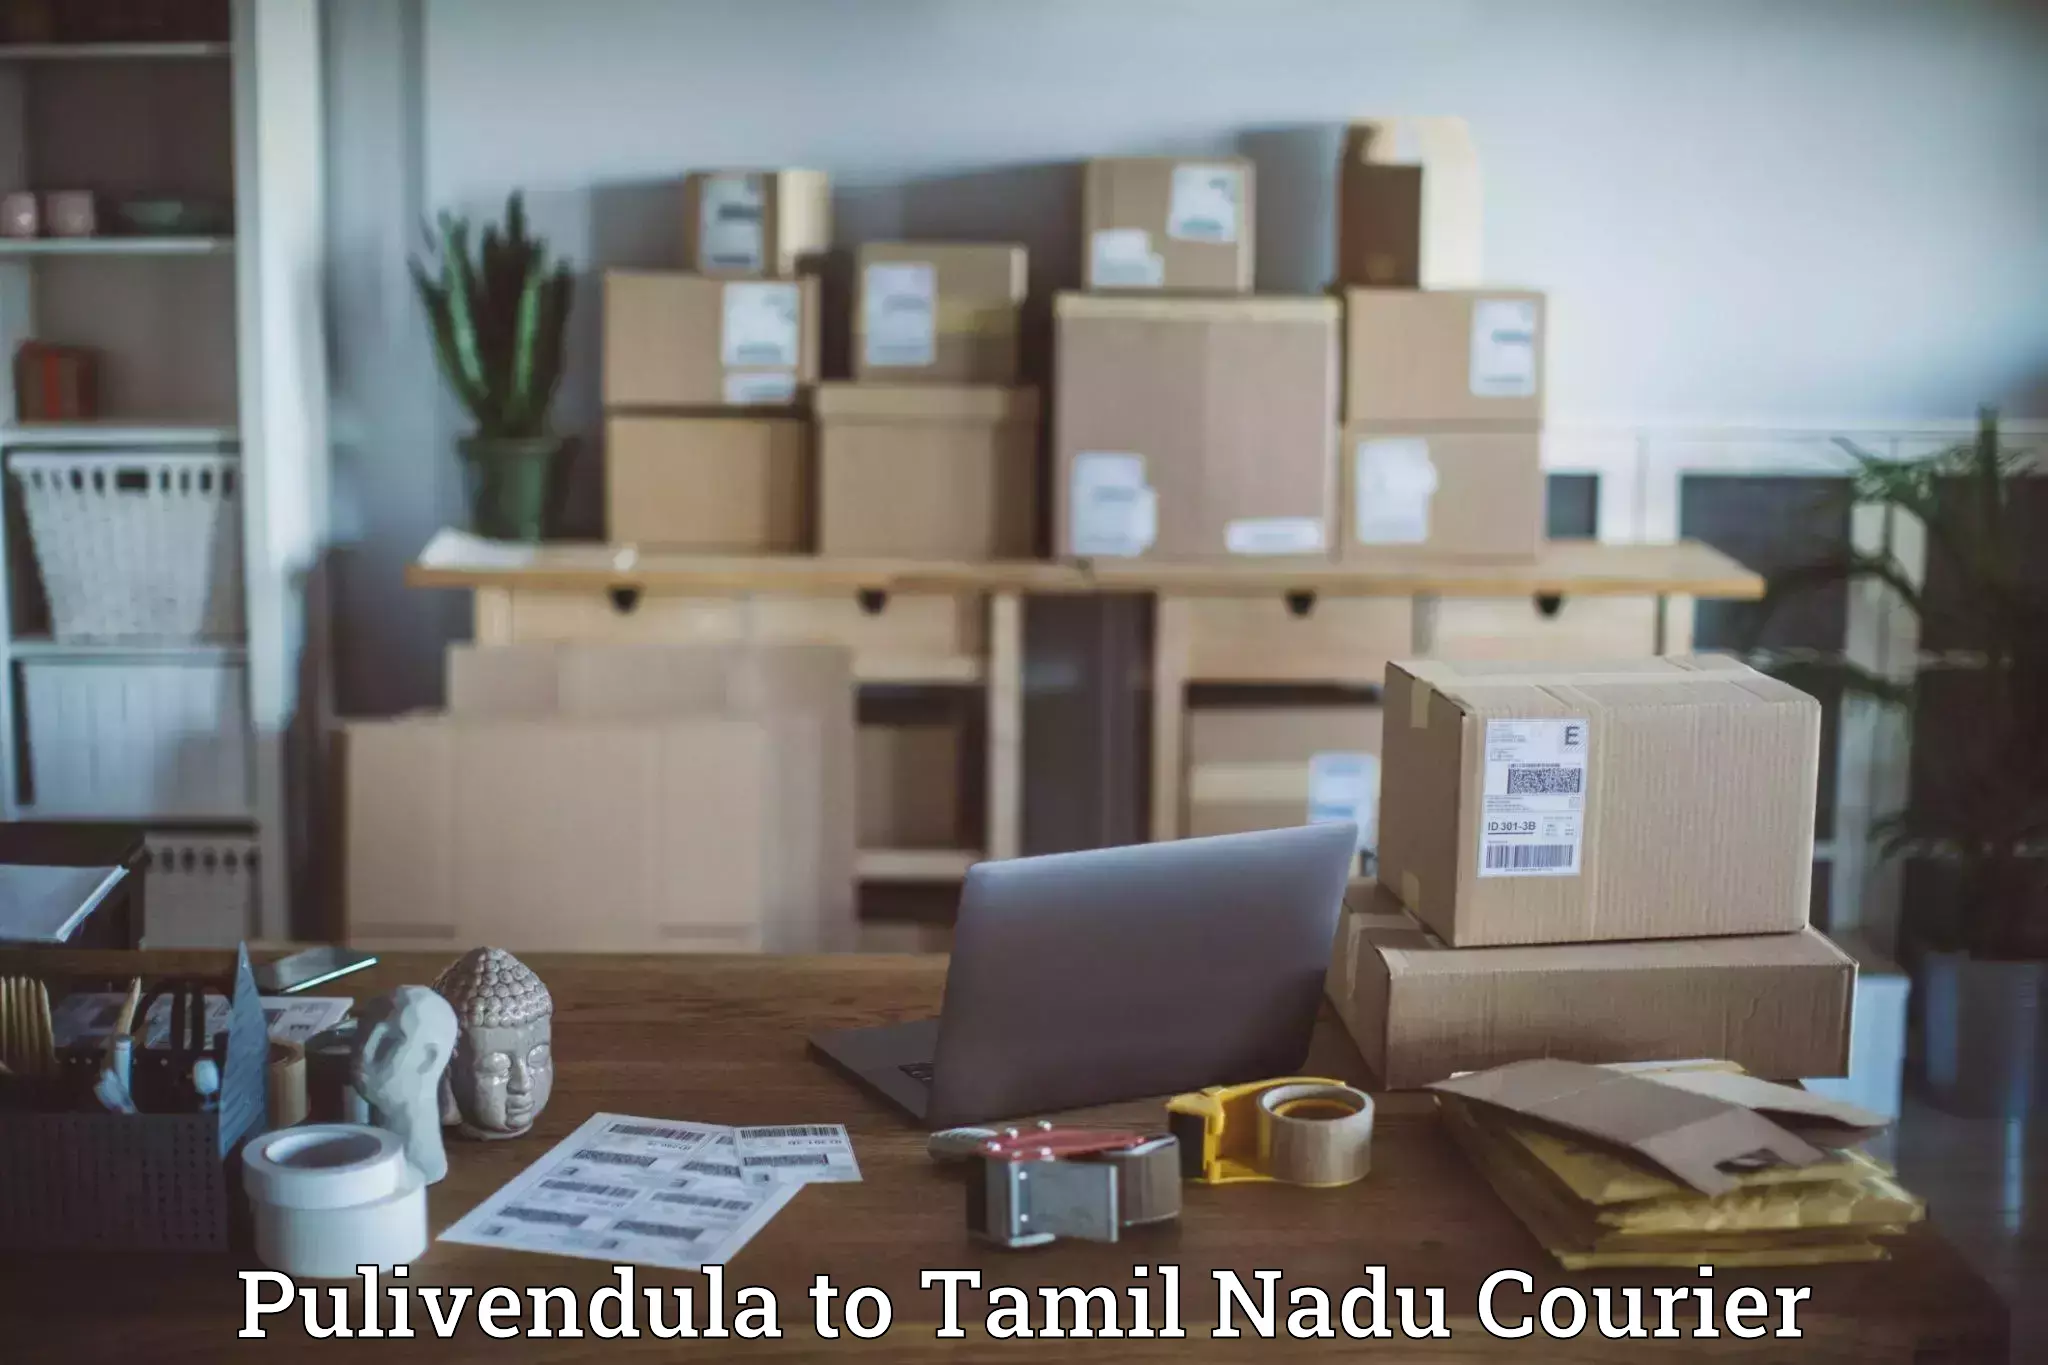 International courier networks Pulivendula to Tamil Nadu